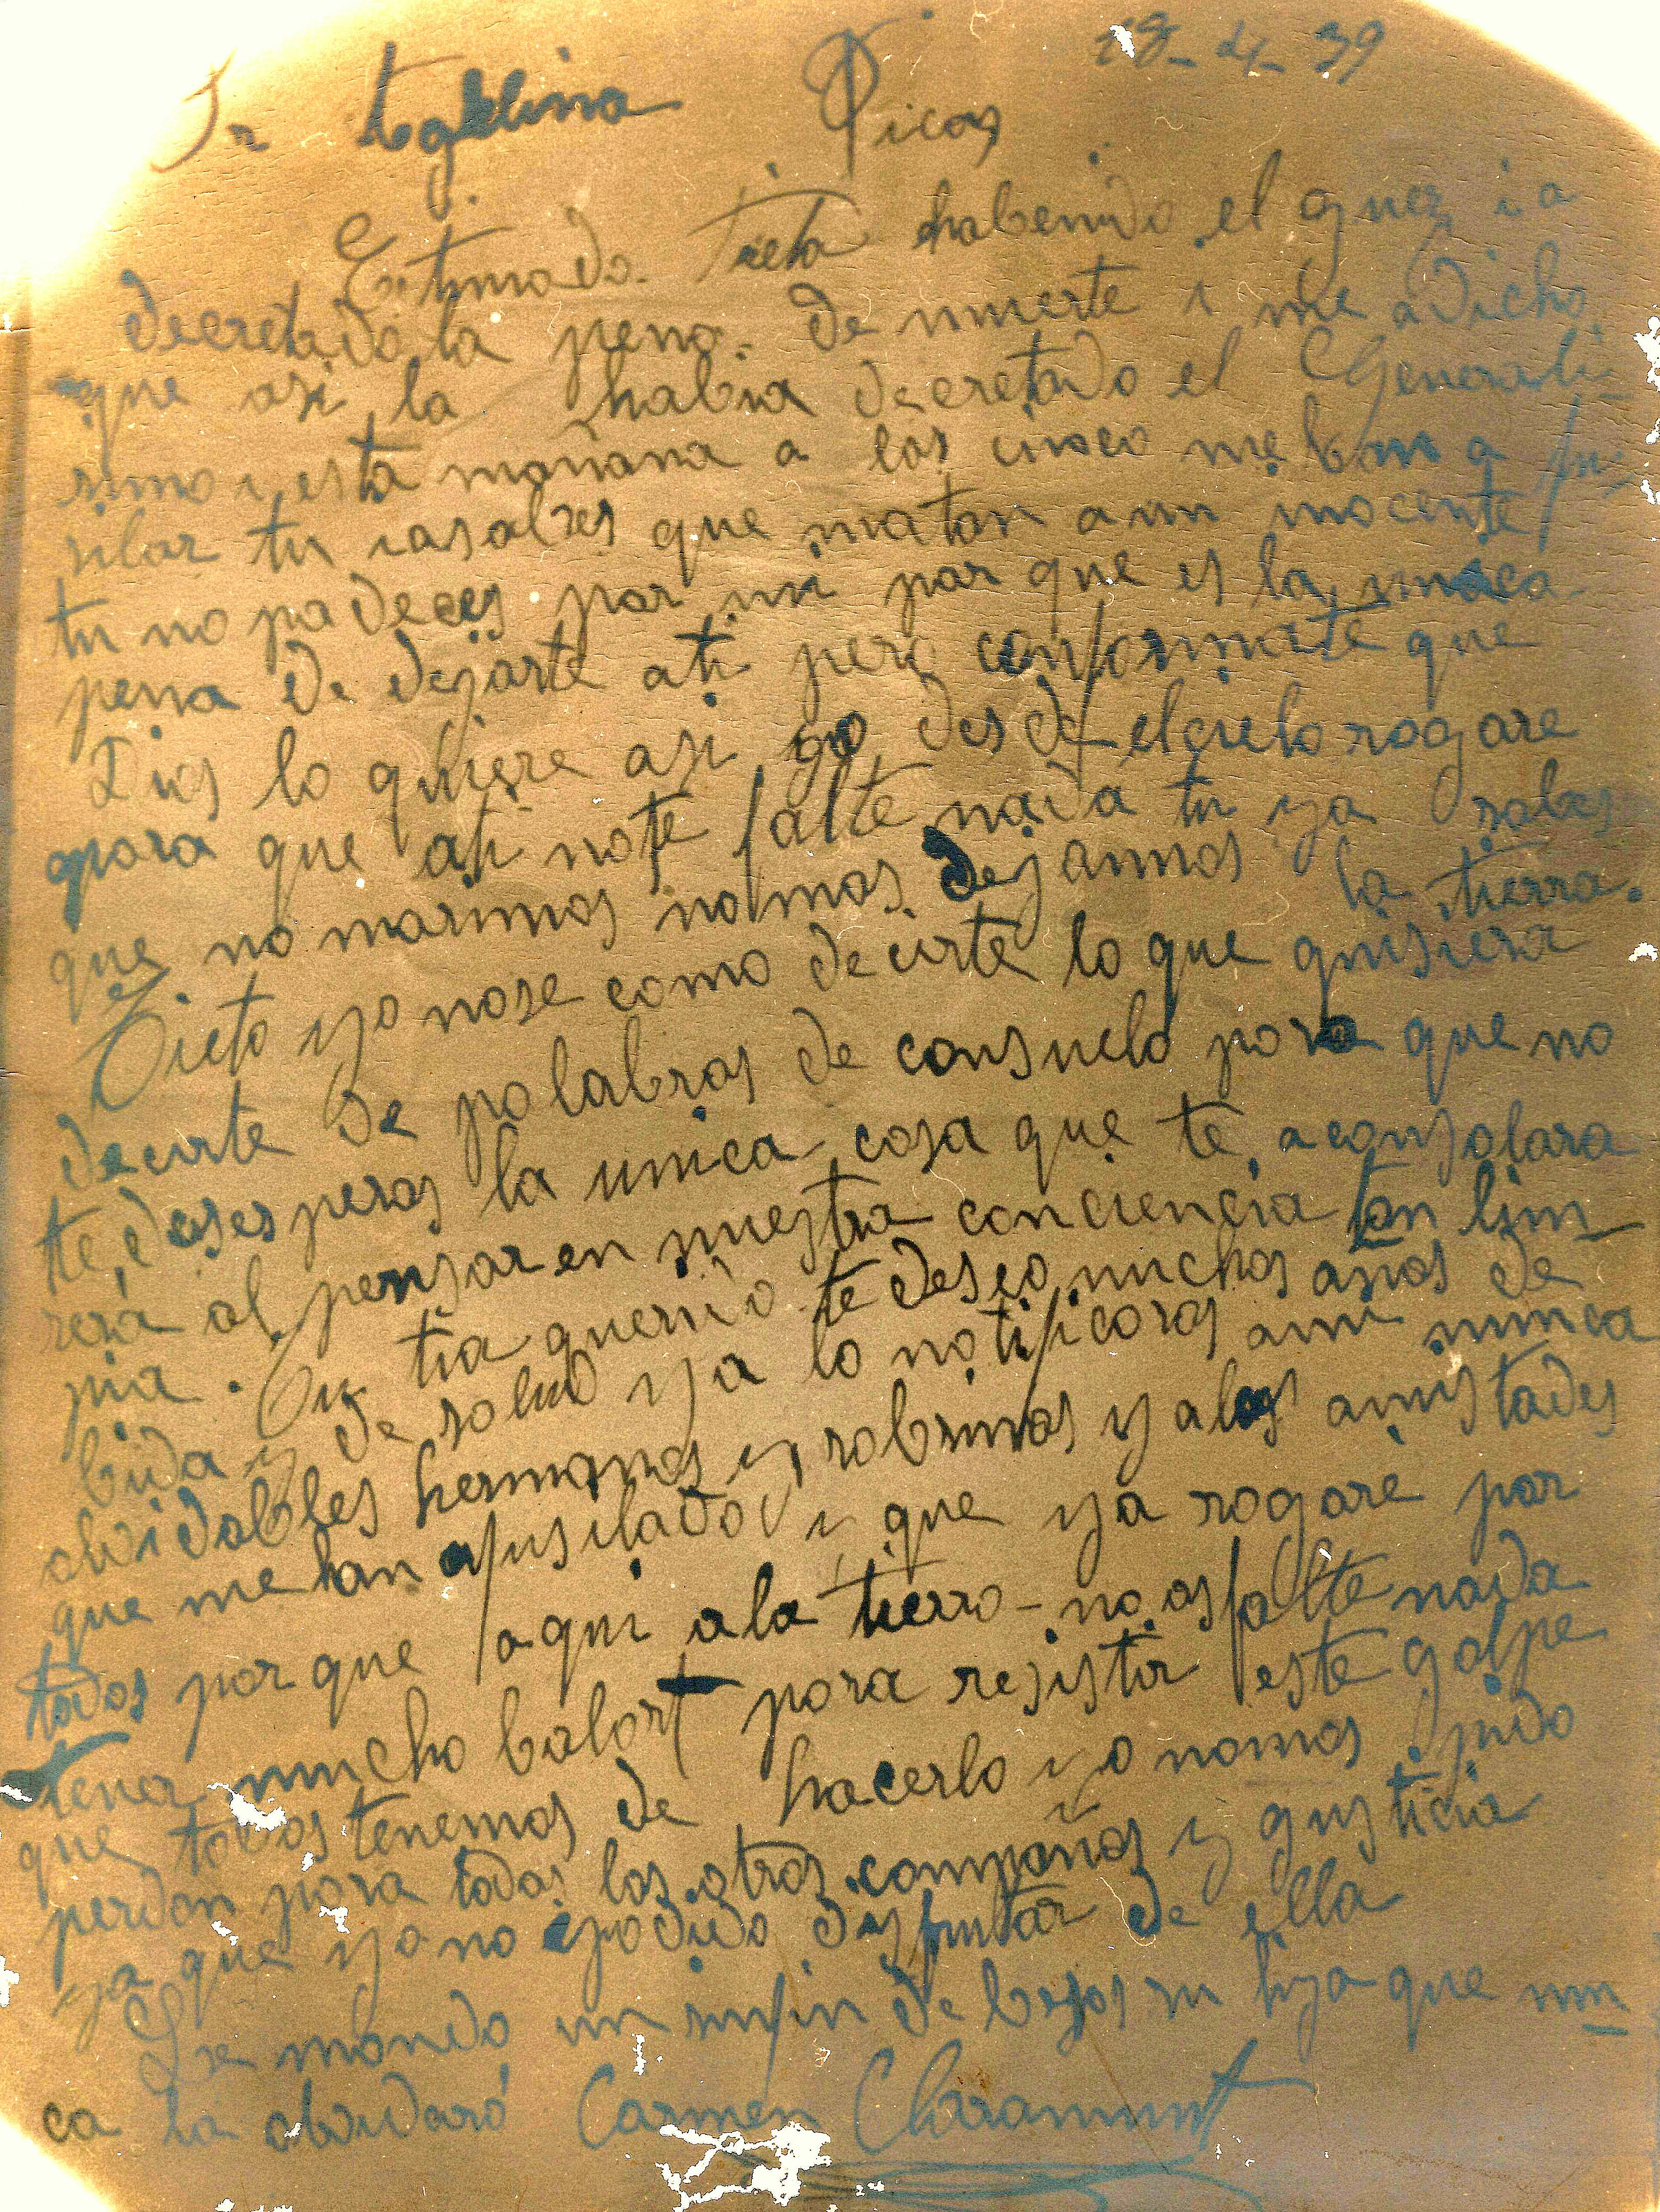 Archivo familiar. Primera carta de despedida de Carme Claramunt Barot a Angelina Picas Coromina.